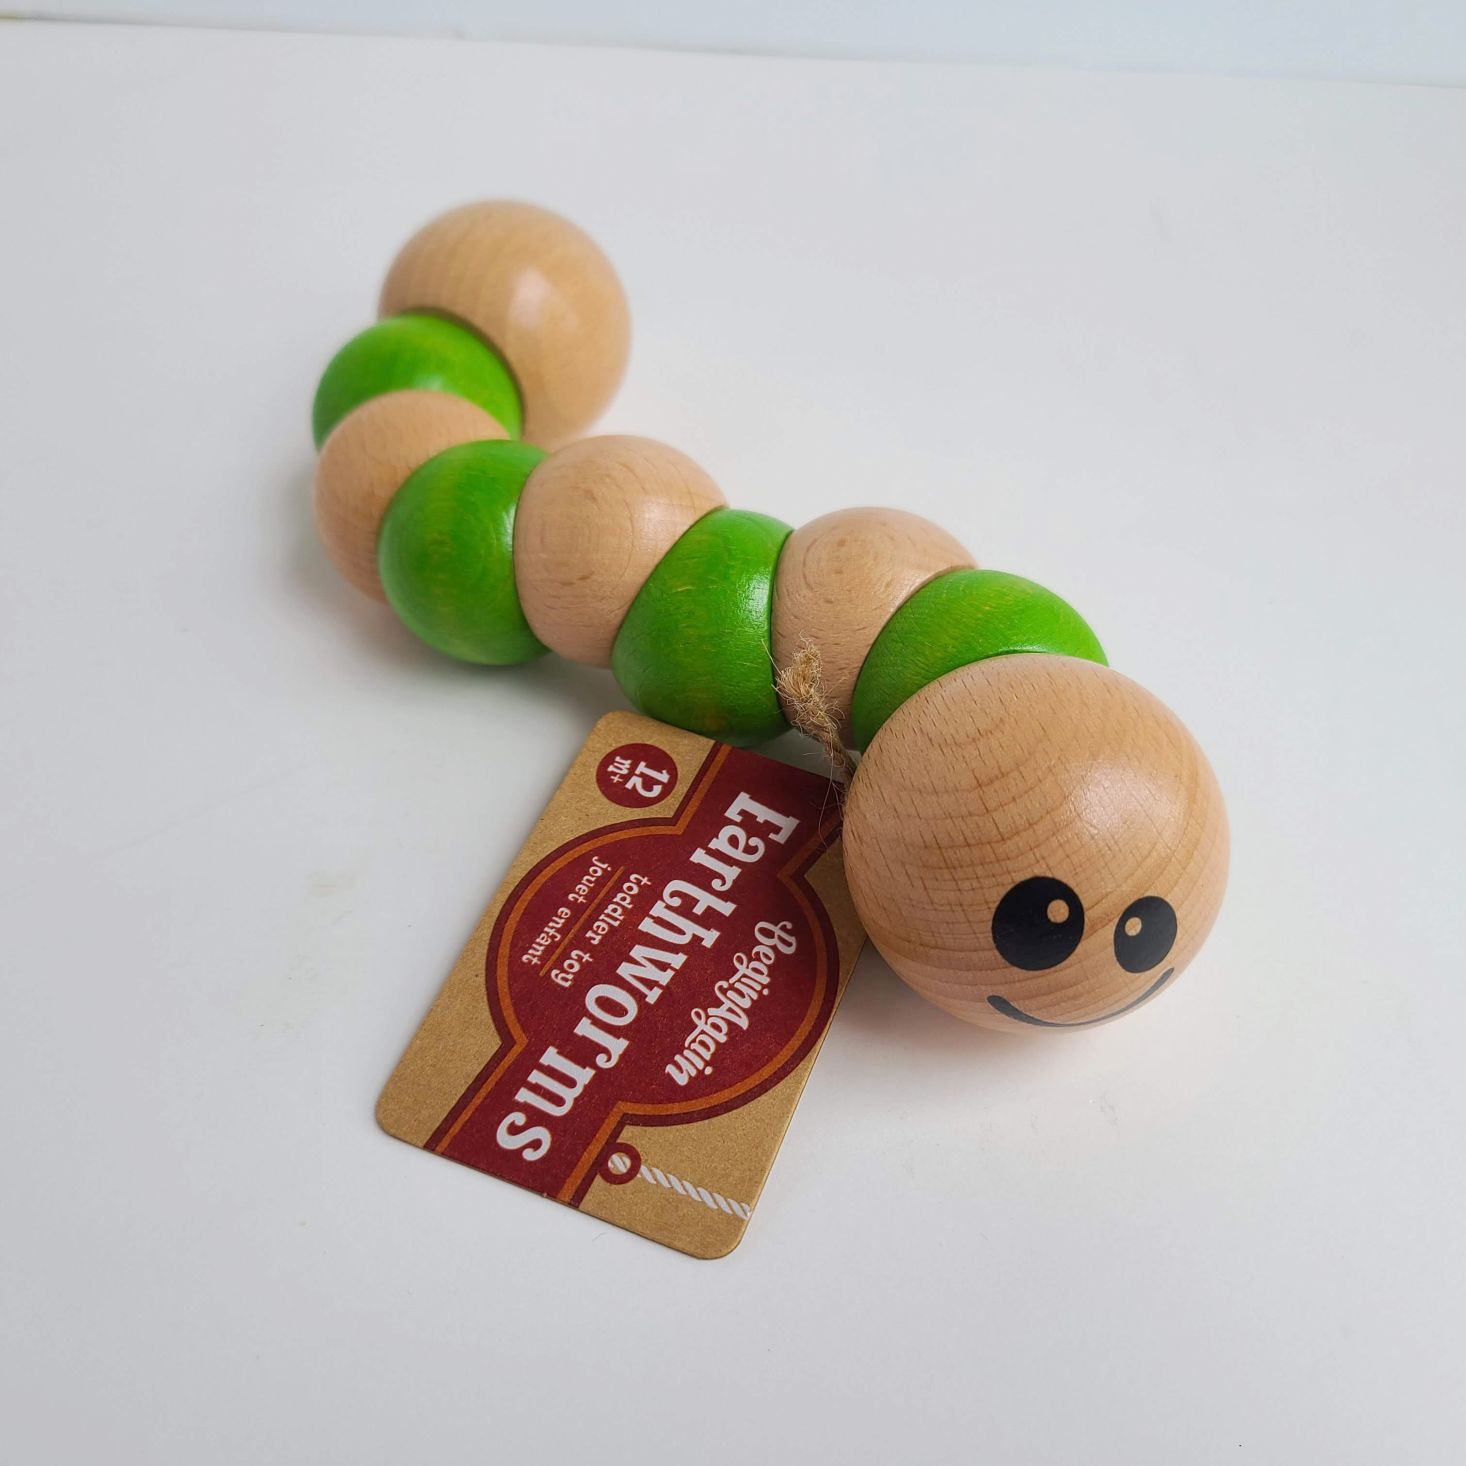 Ecocentric Moms Box October 2020 caterpillar toy 2